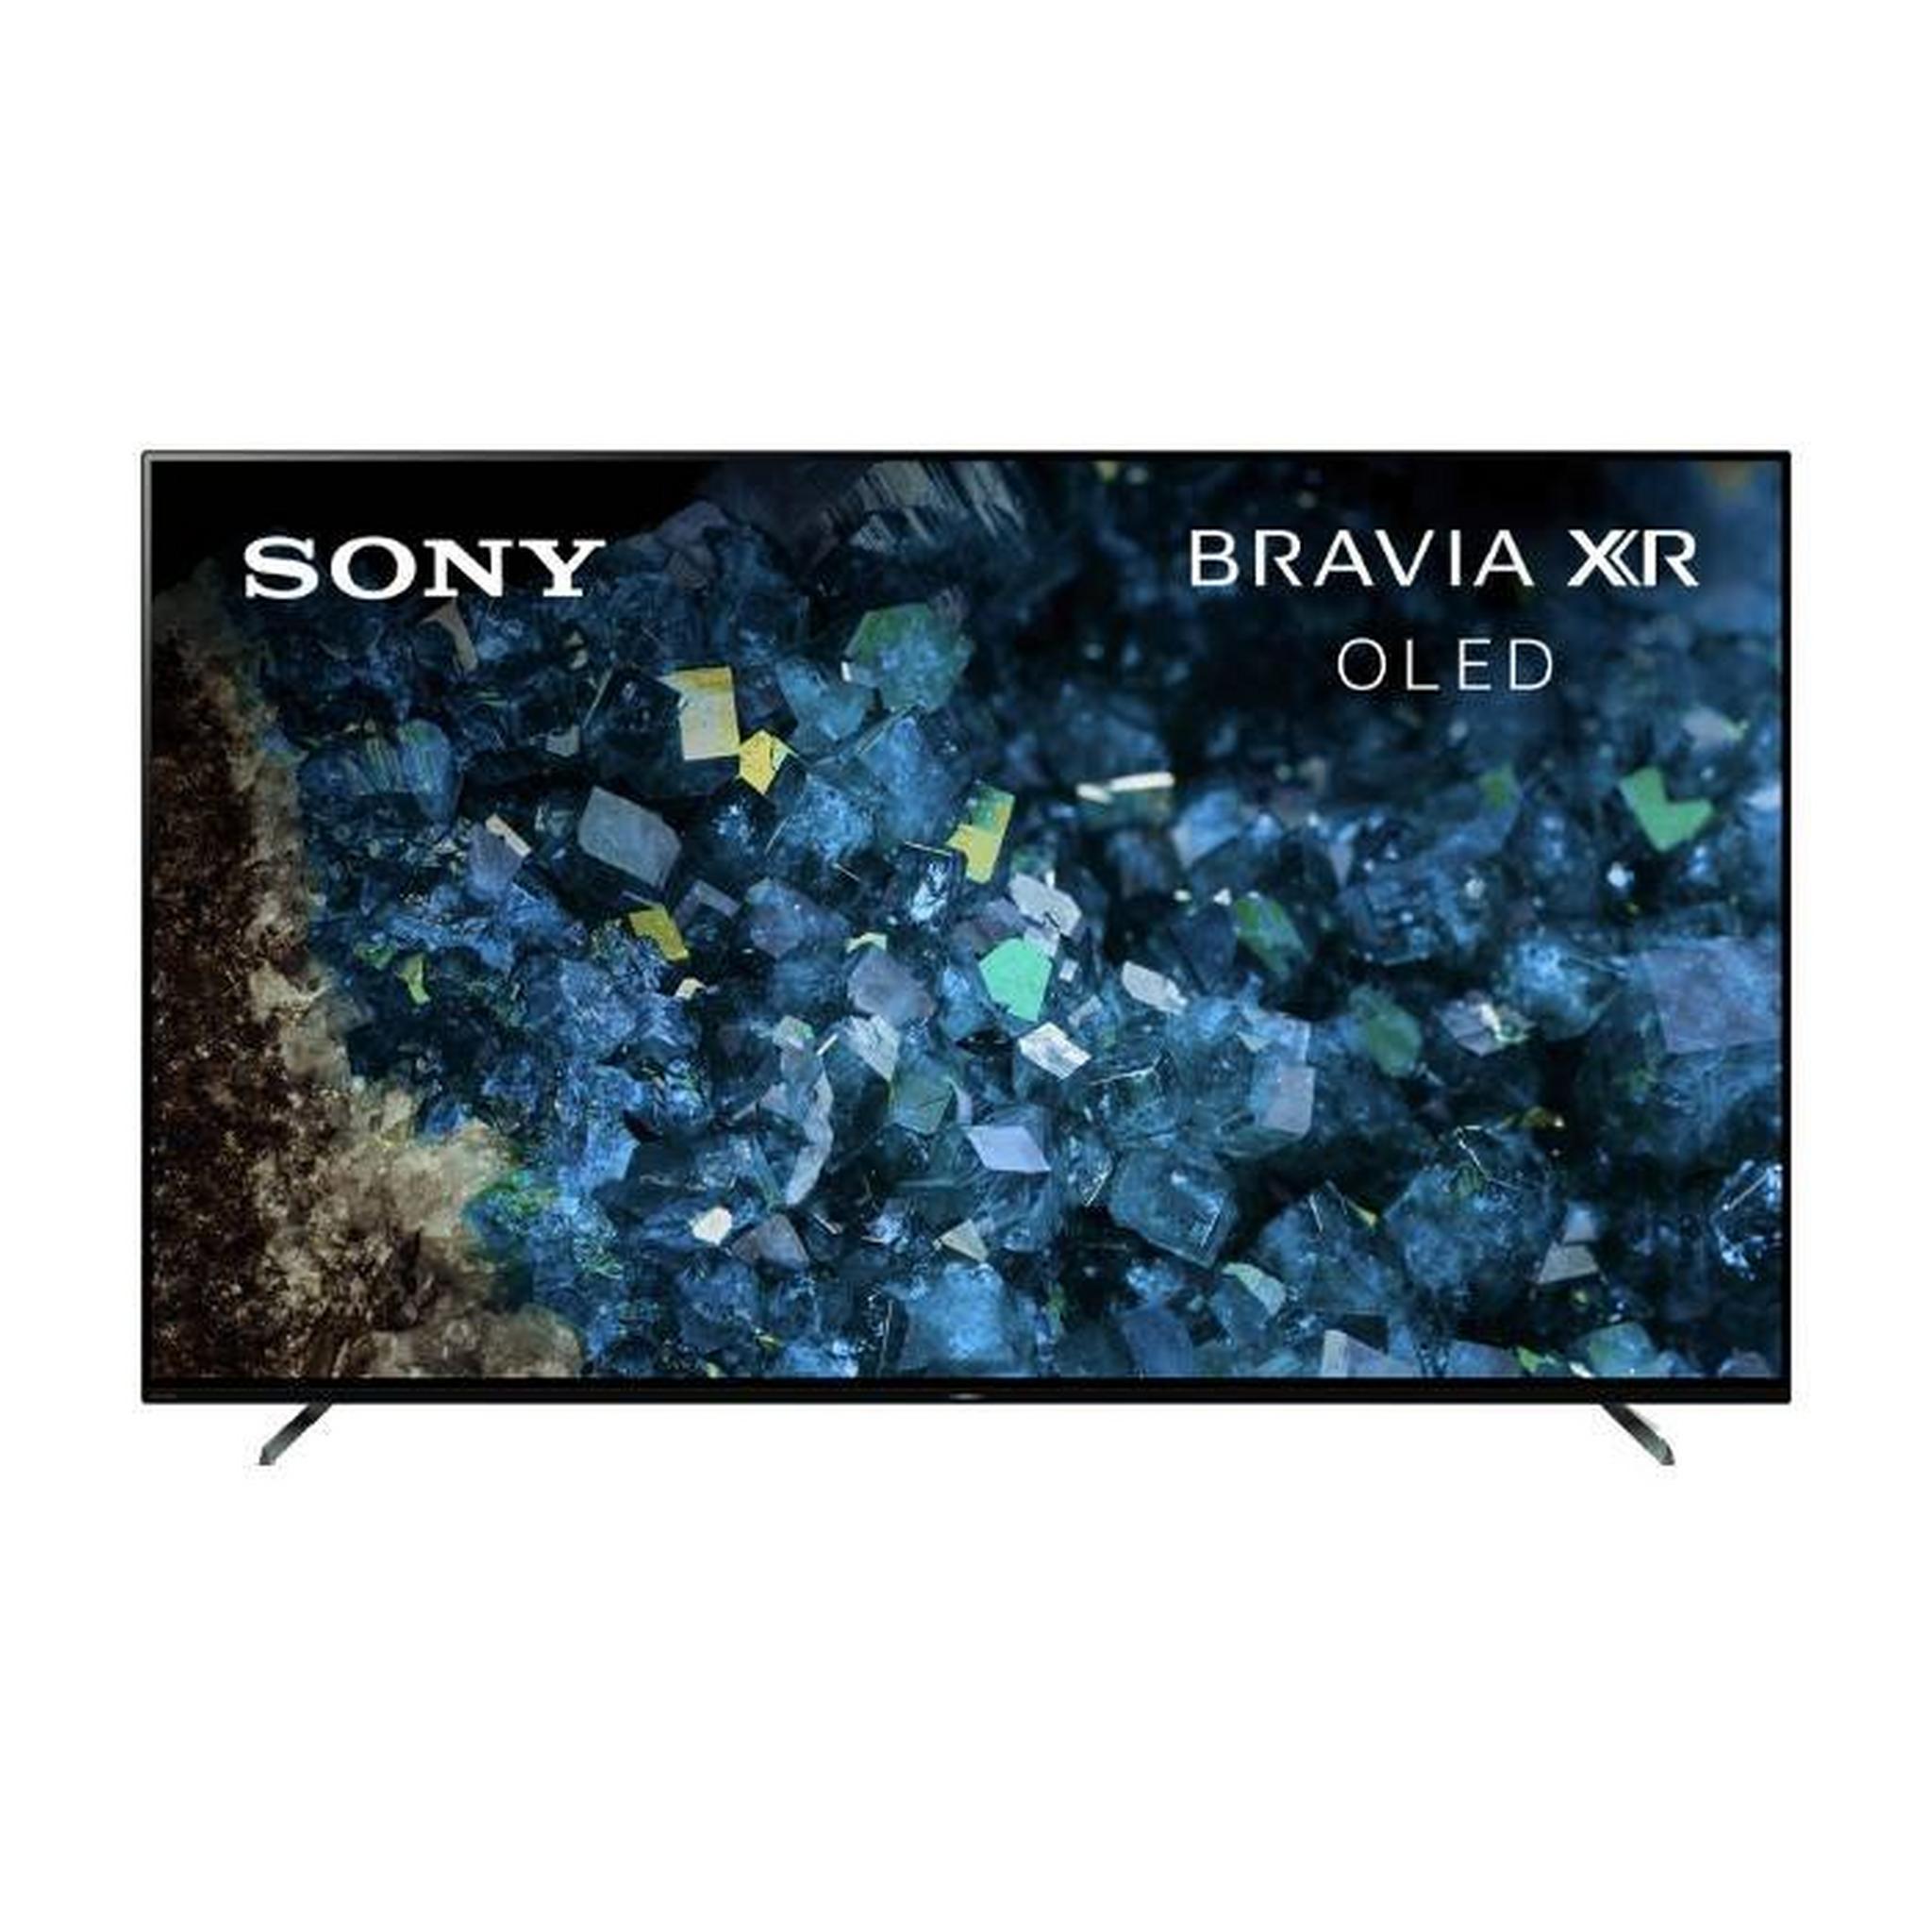 Sony Bravia XR 65-inch Class A80L 4K OLED HDR Smart Android TV, XR-65A80L - Titanium Black